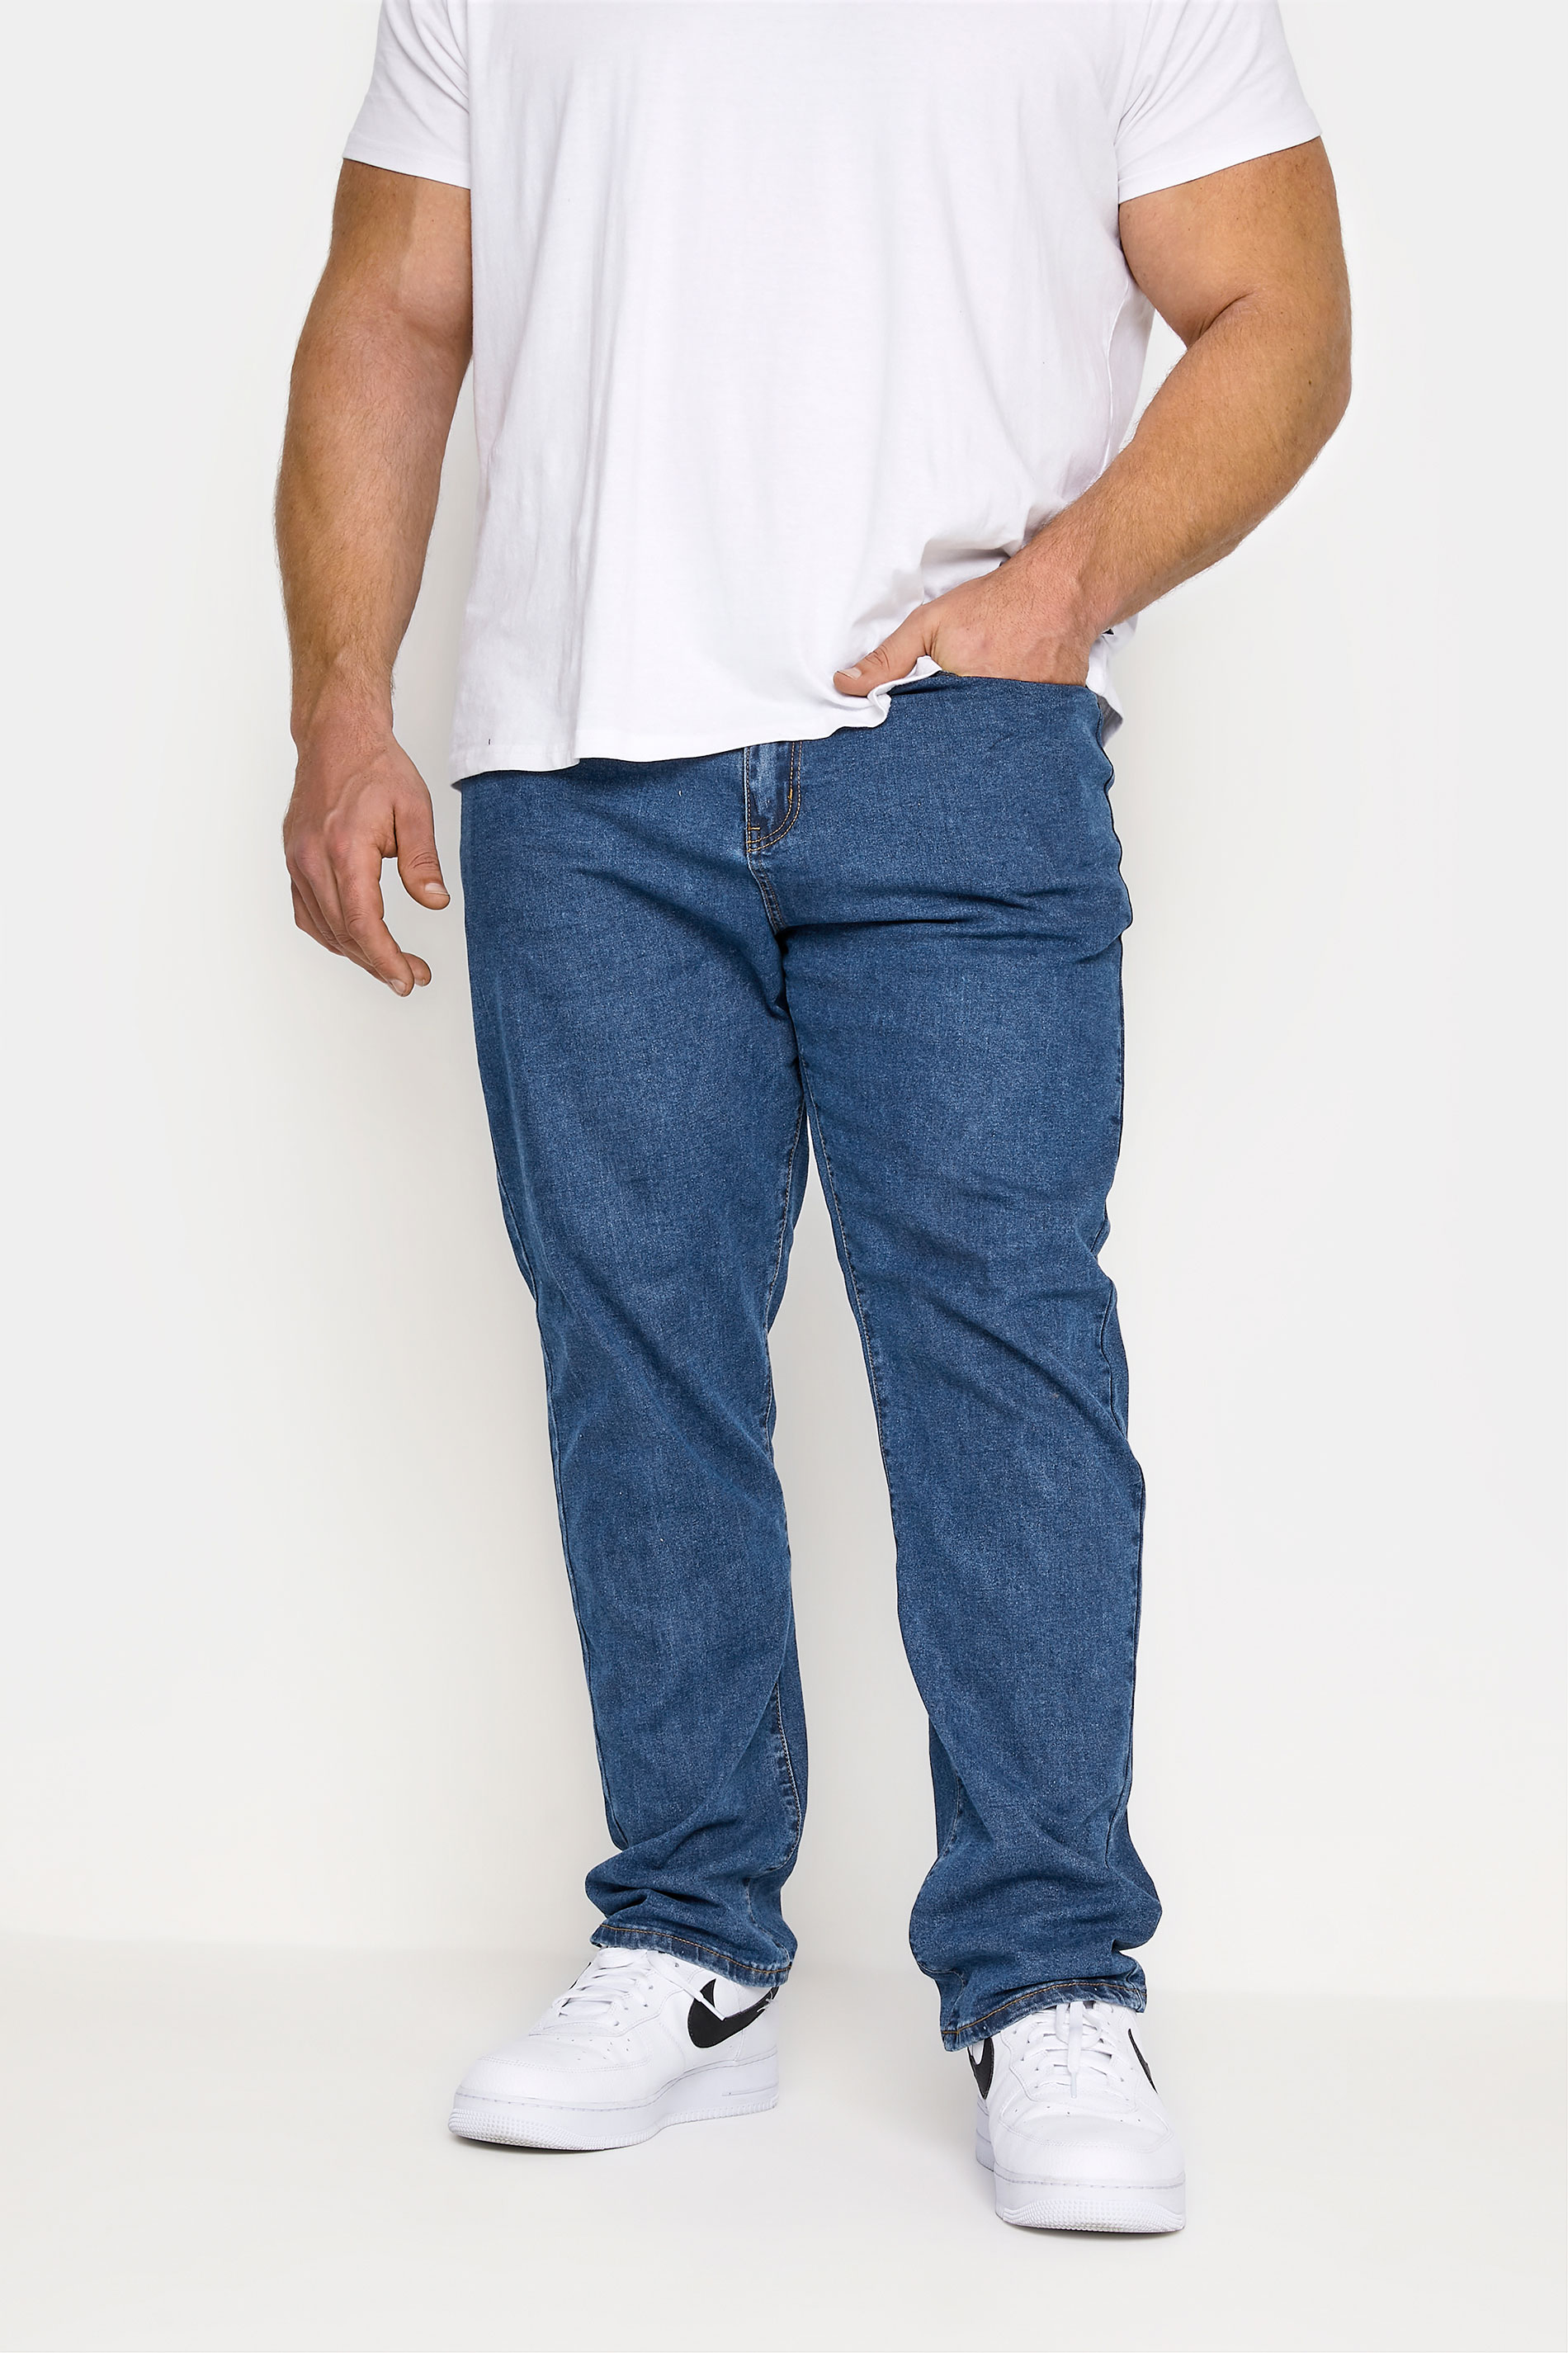 Image of Inside Leg Size 29", Waist Size 44 Mens Kam Big & Tall Blue Regular Fit Stretch Jeans Big & Tall